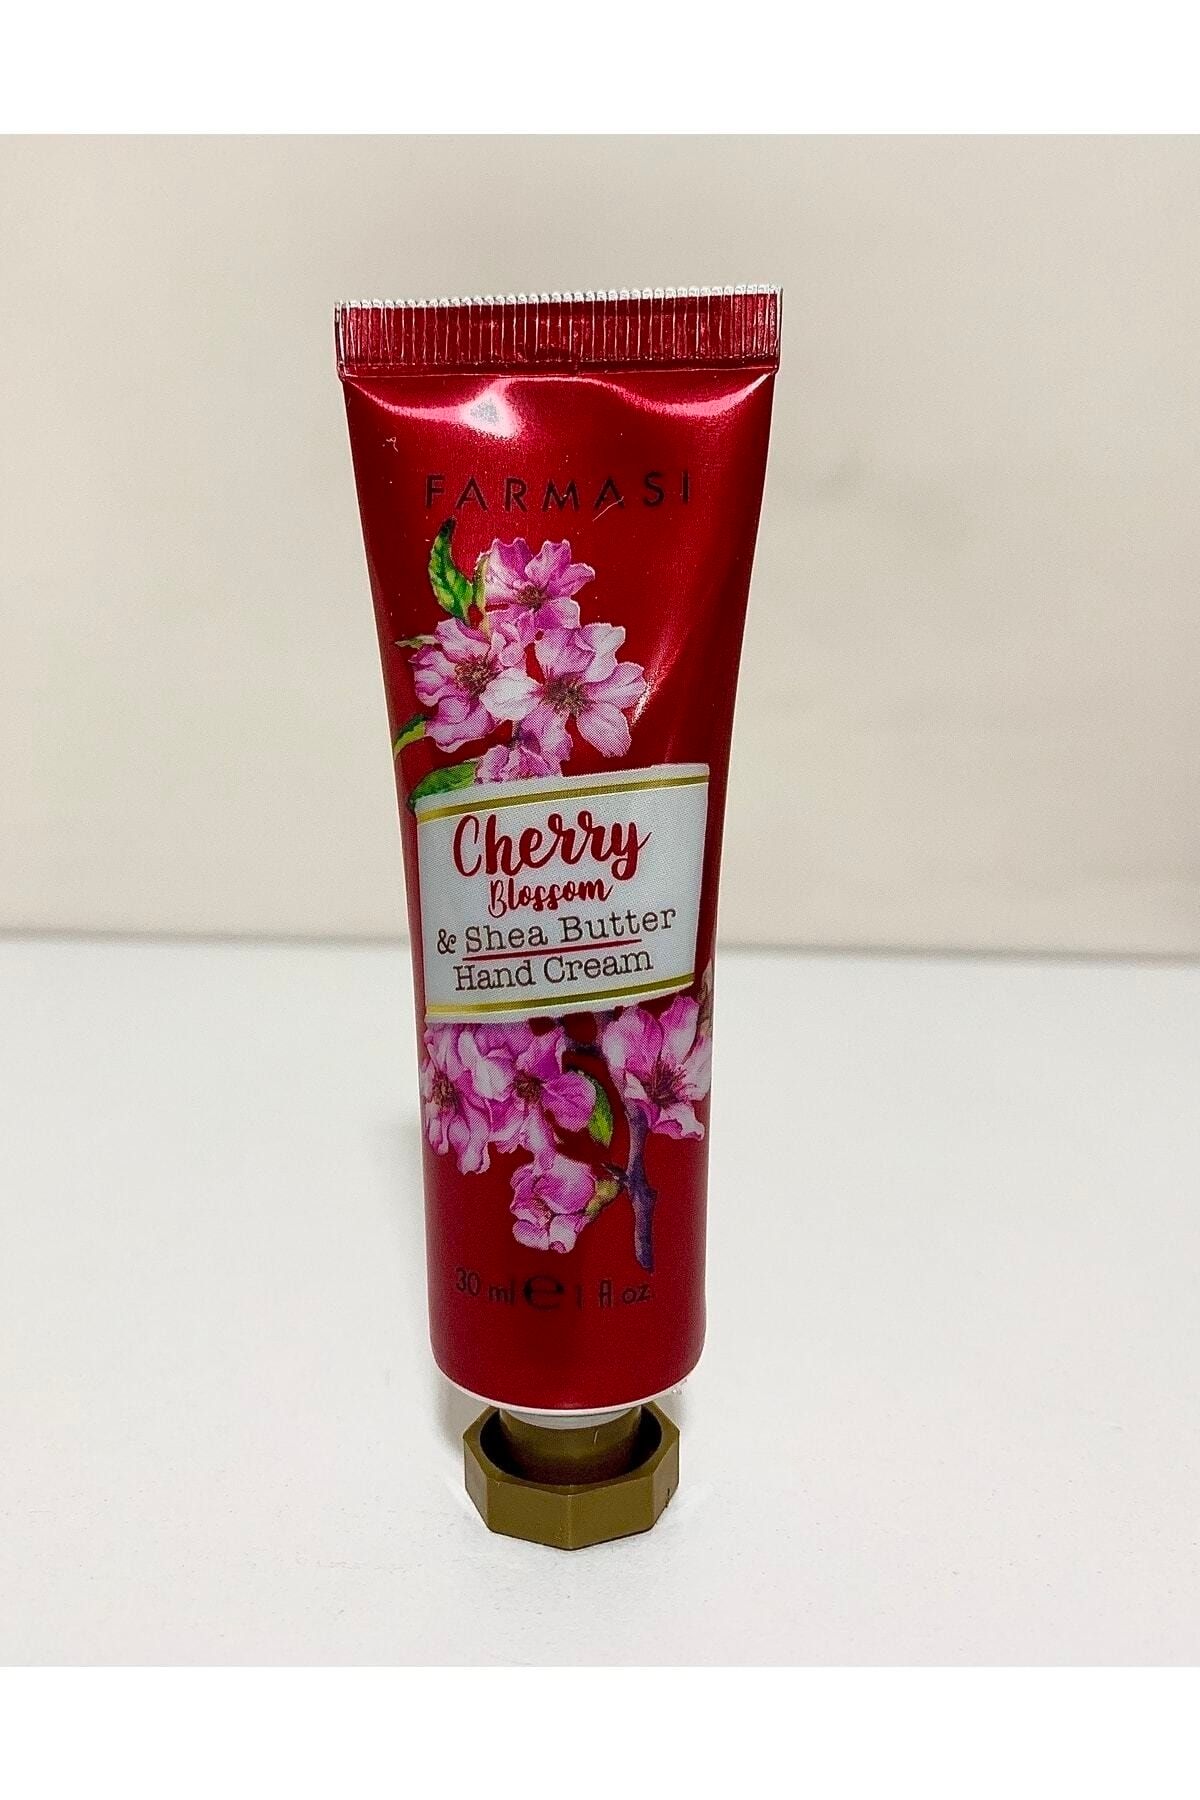 Farmasi Cherry Blossom Kiraz Çiçeği She Yağı El Kremi